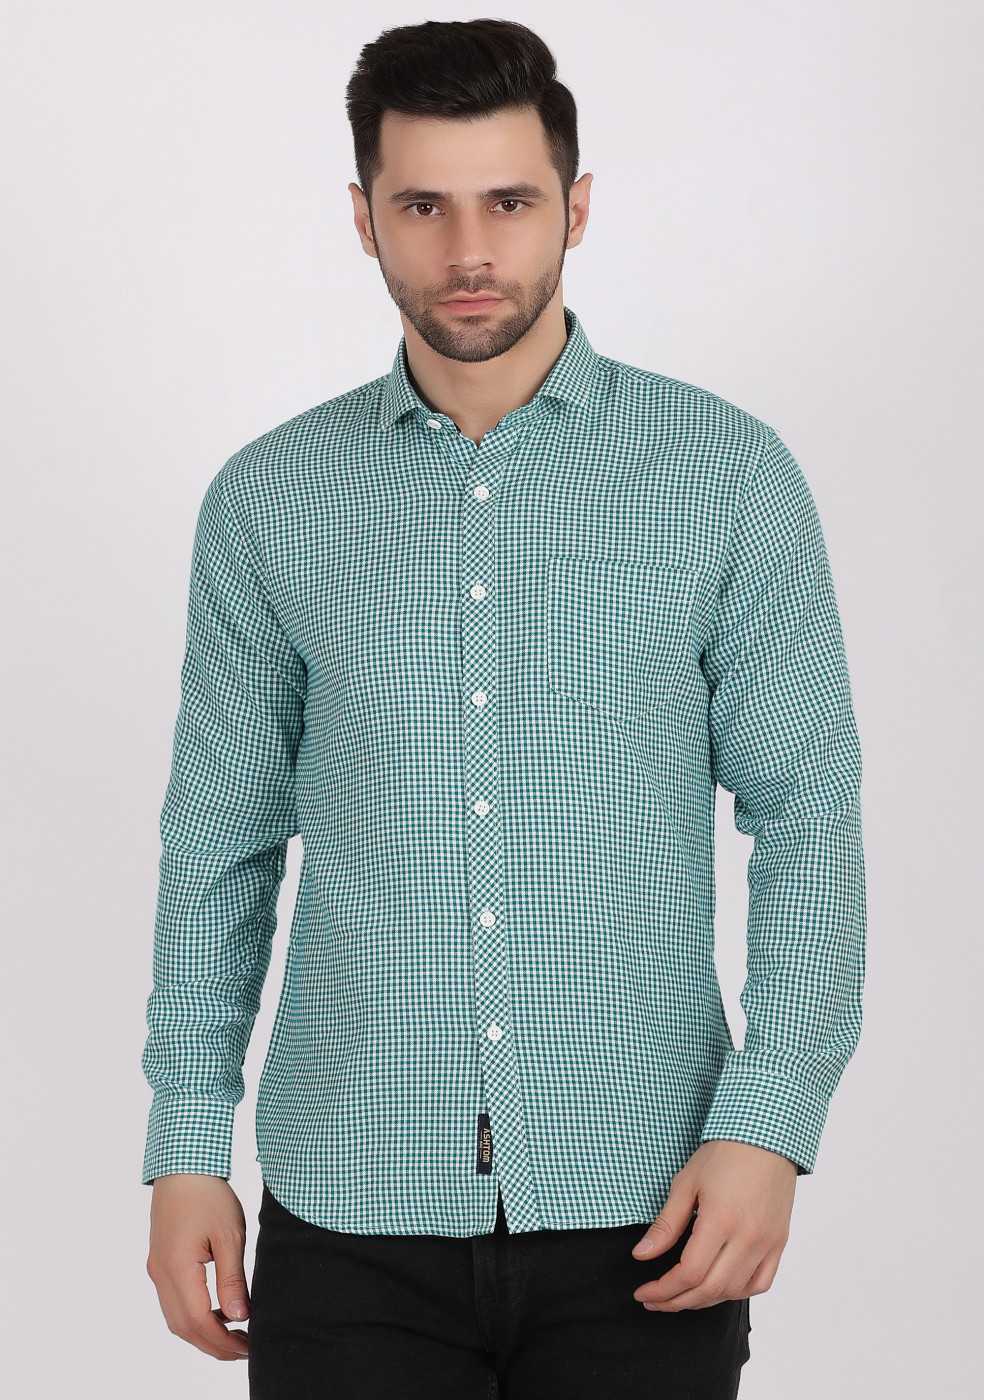 ASHTOM Green Color Small Check Shirt For Men